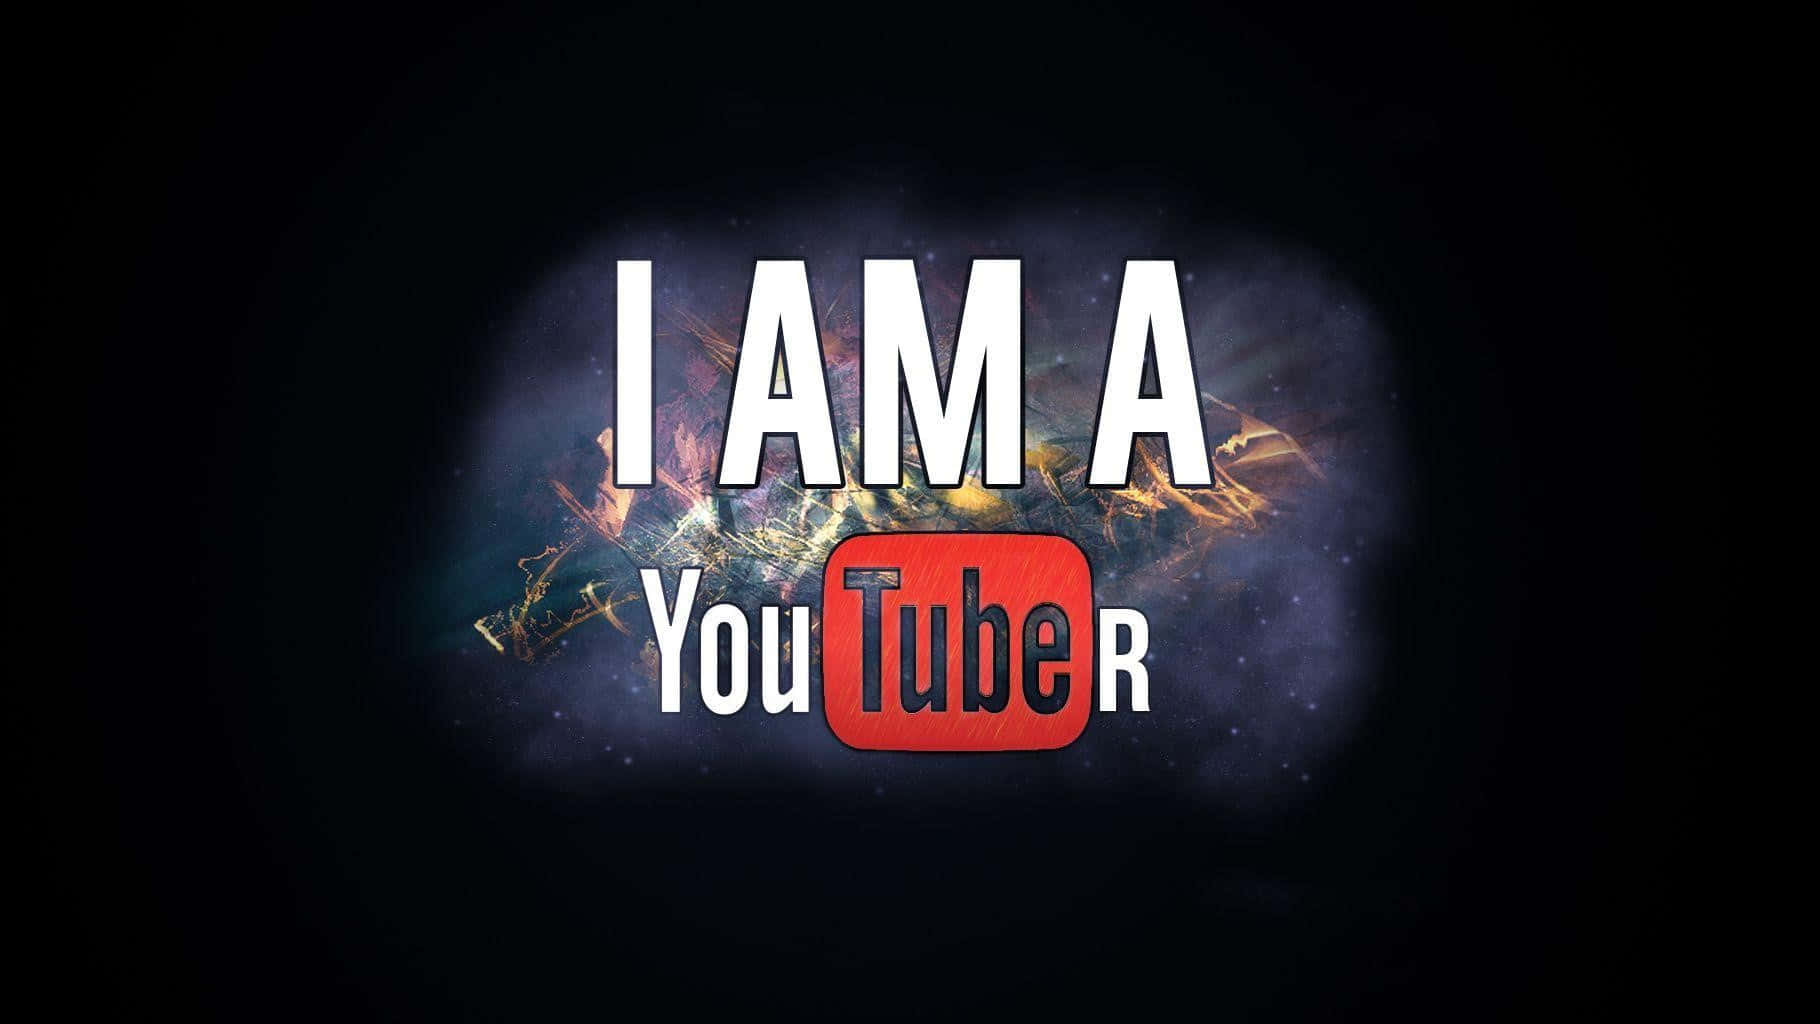 Youtube Logo on a Black Background